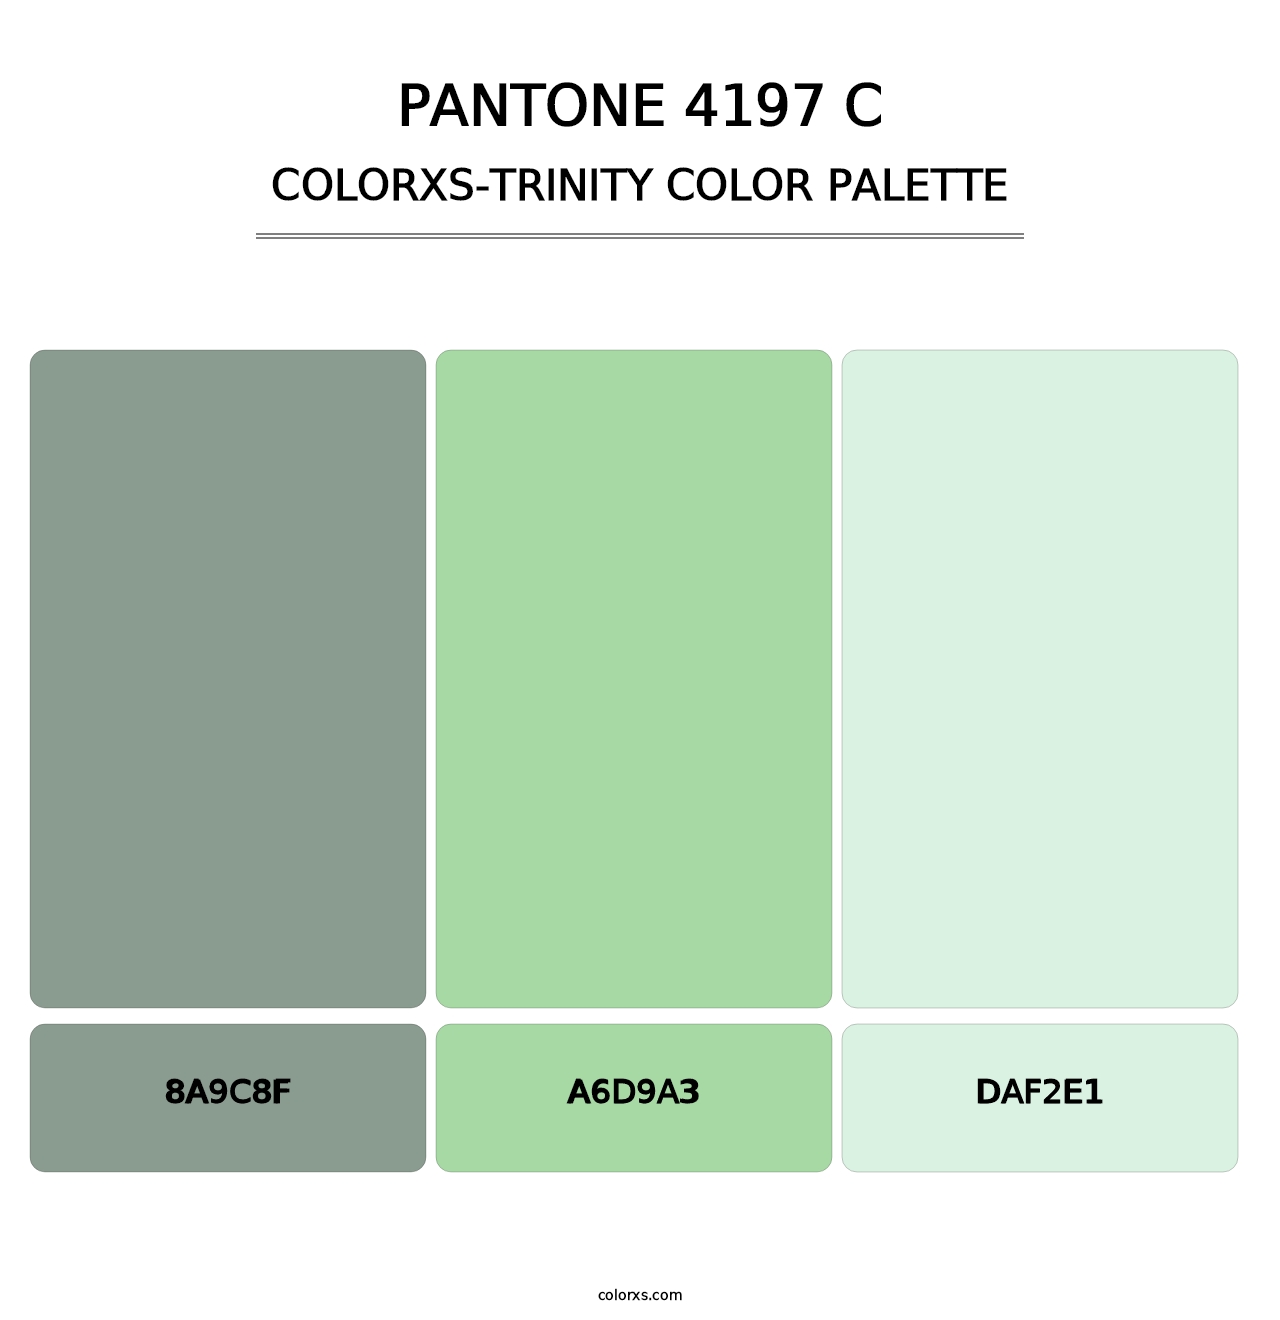 PANTONE 4197 C - Colorxs Trinity Palette